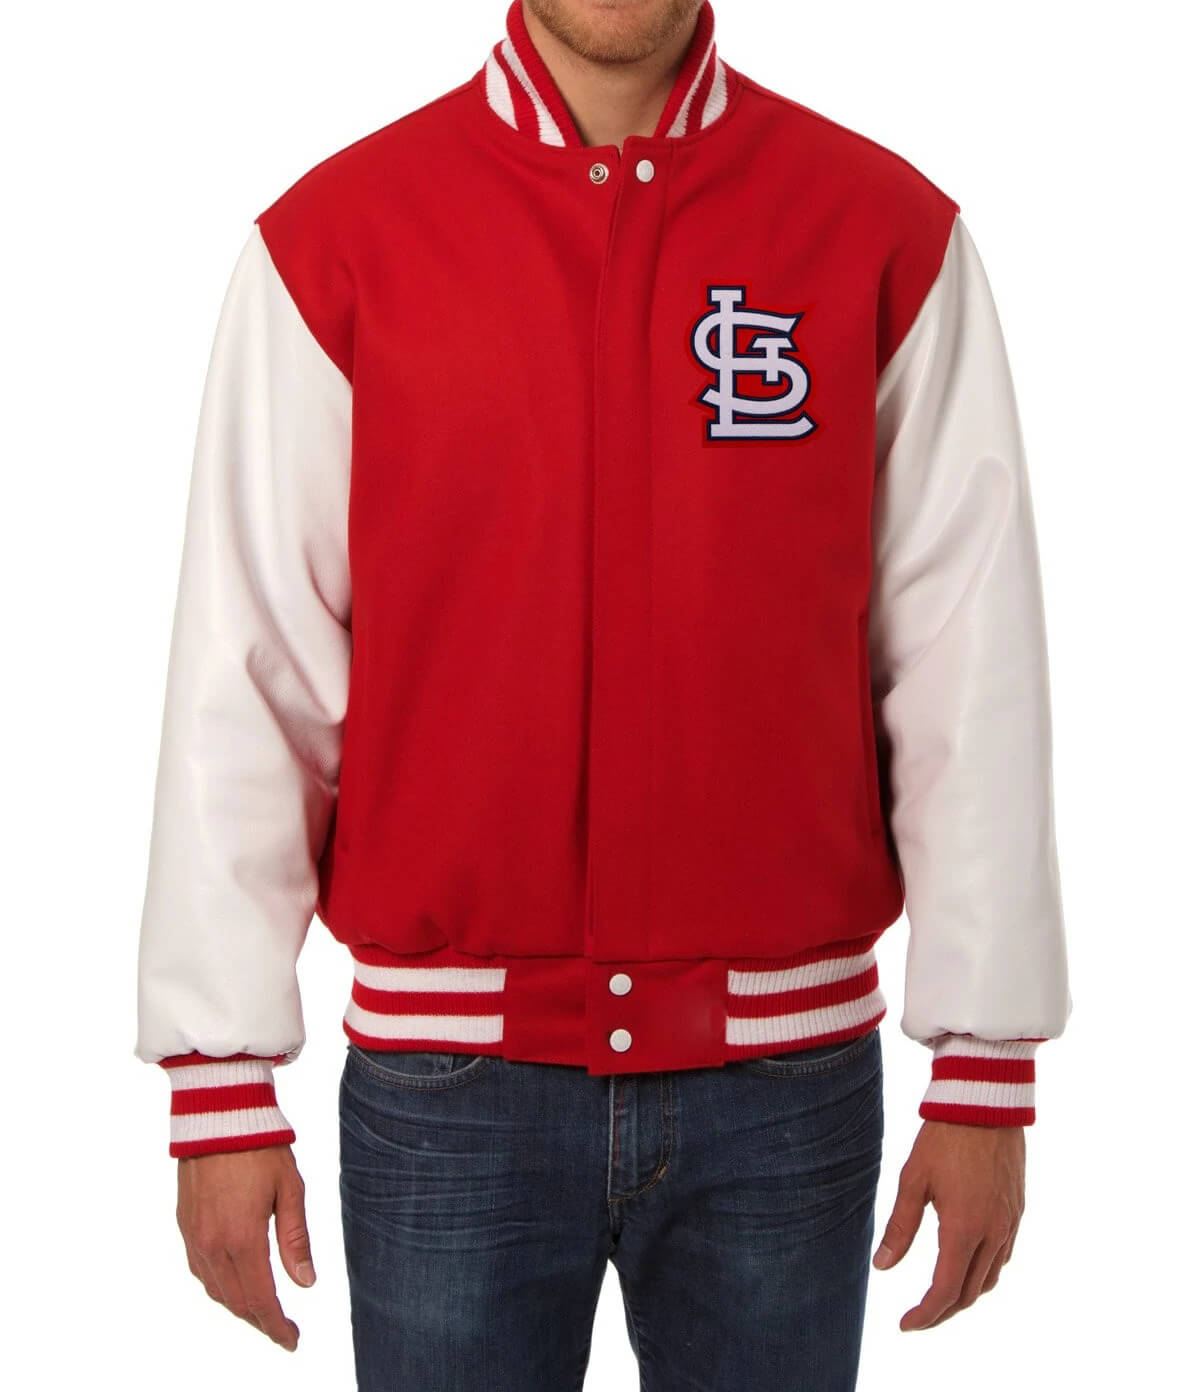 Genuine Merchandise Red Zip Up Jacket Mens Small St. Louis Cardinals